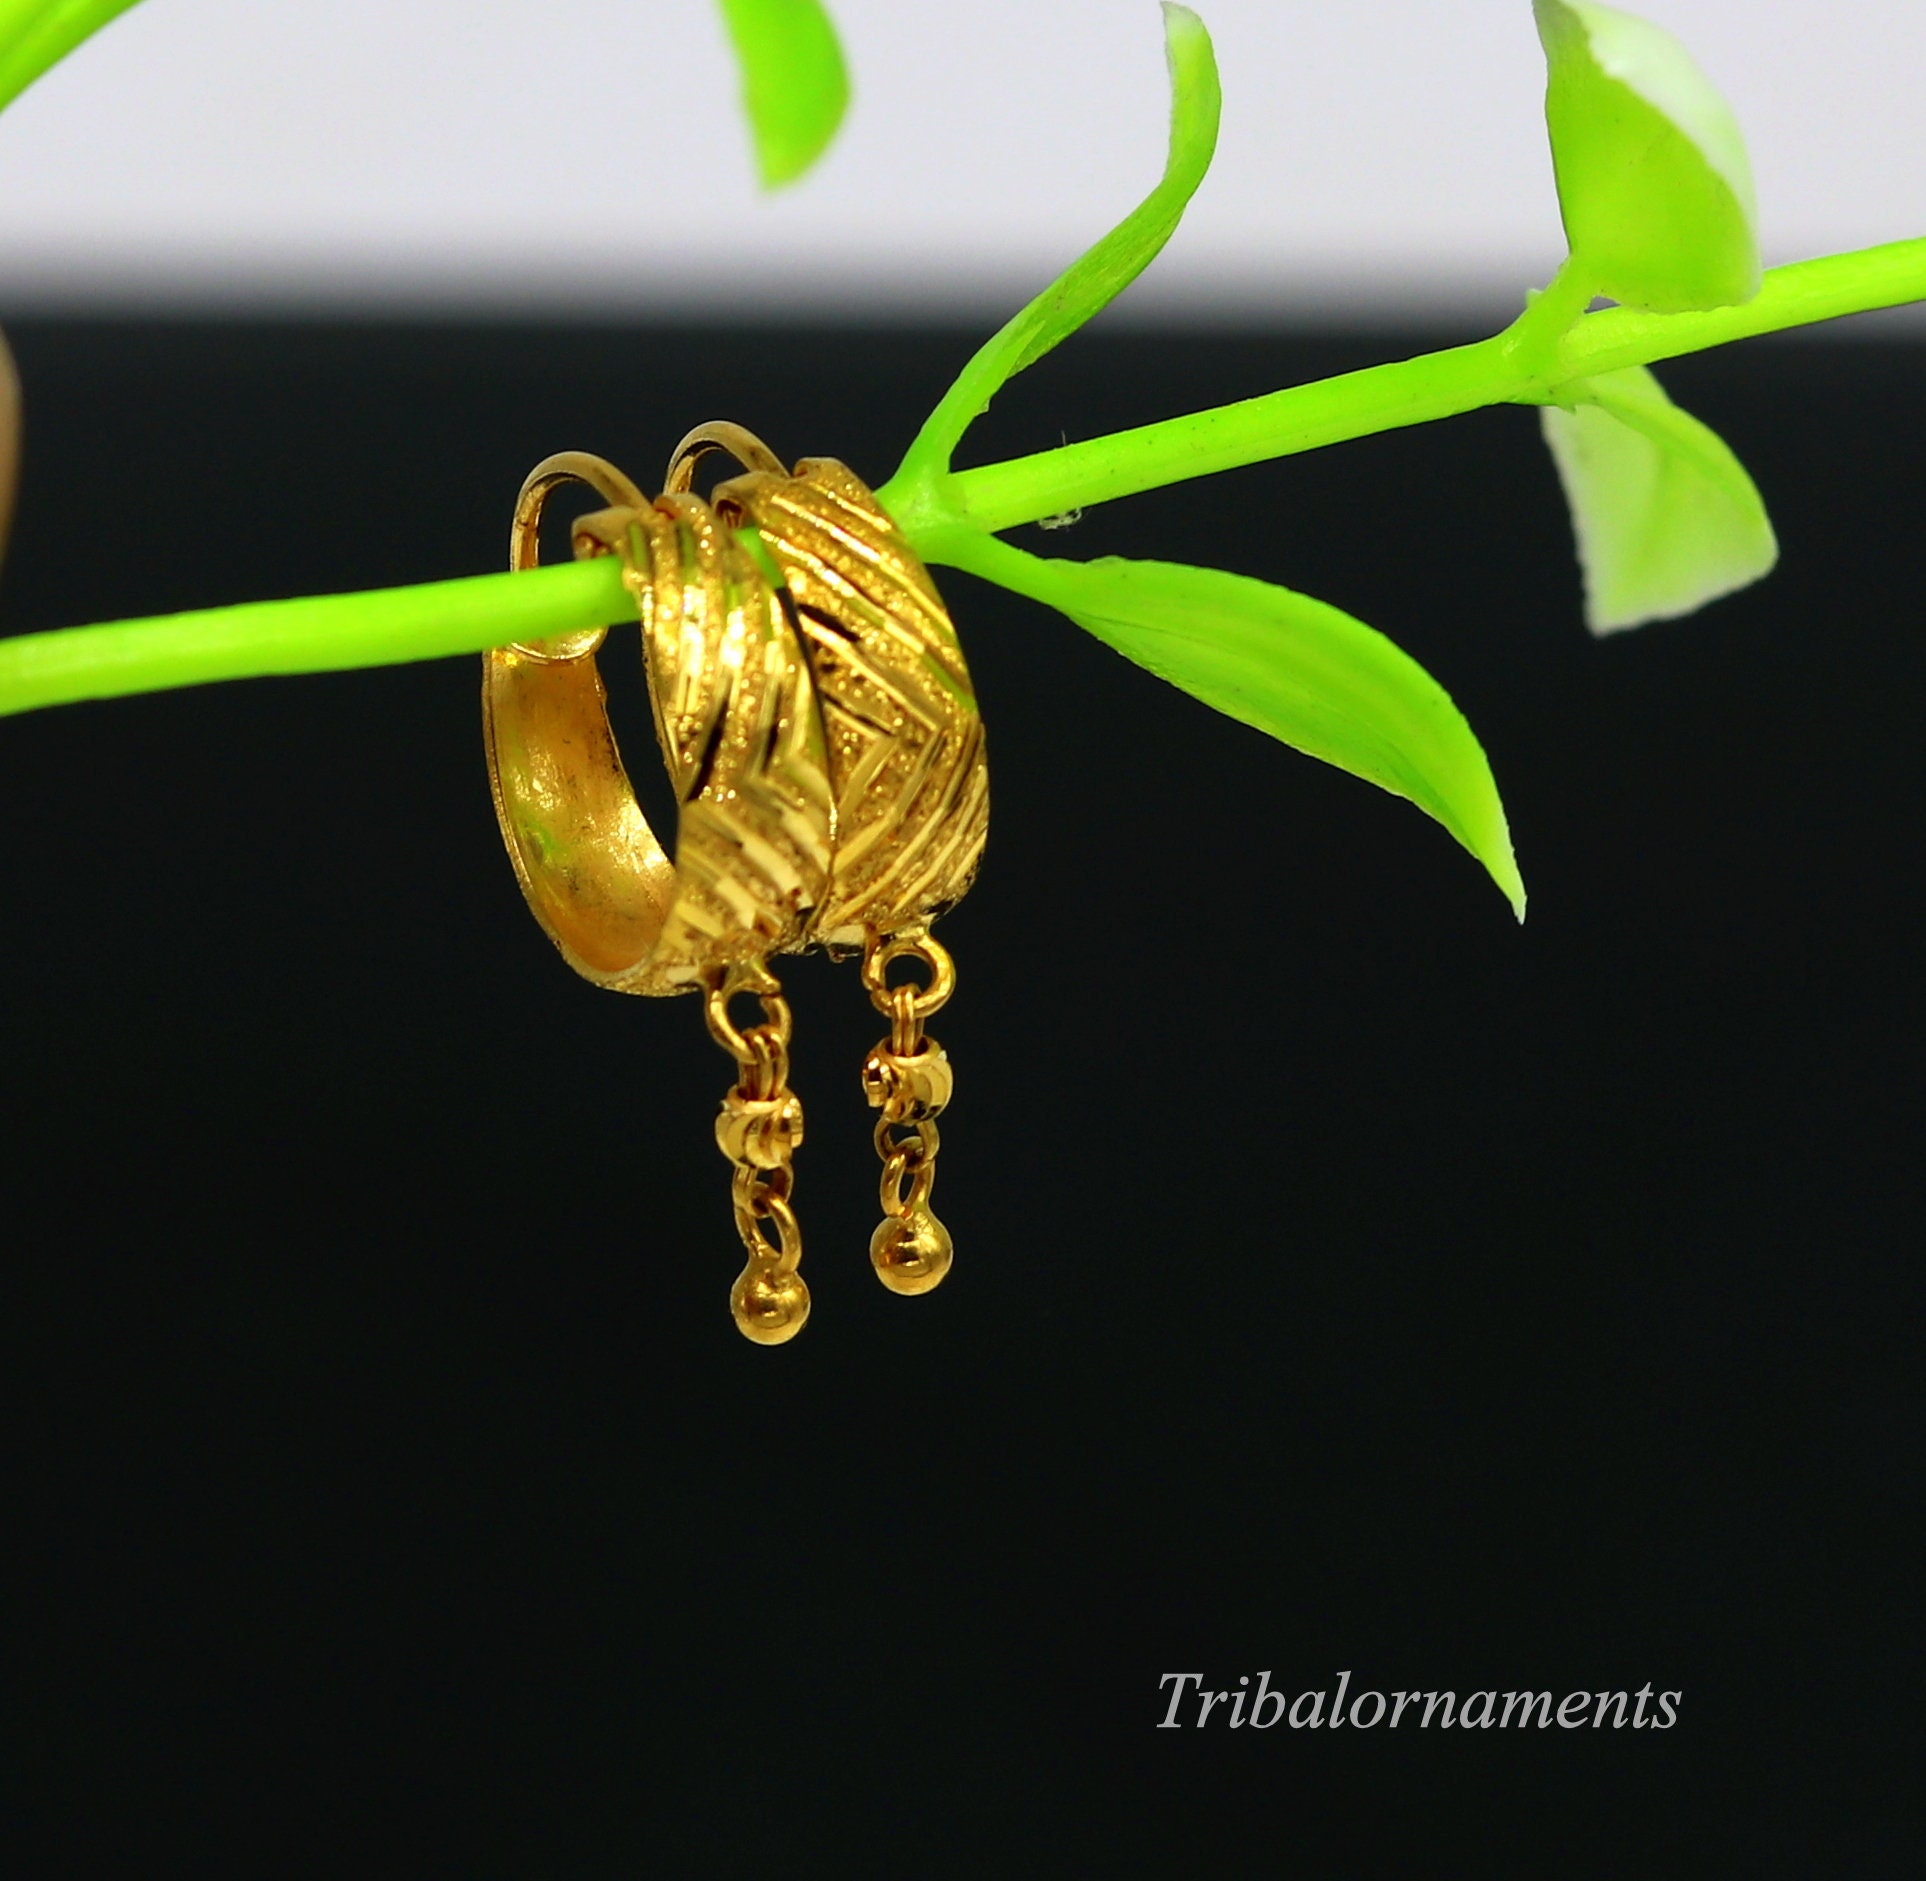 Vintage design 18kt yellow gold handmade fabulous hoops earring bali,  amazing customized gifting unisex tribal jewelry ho44